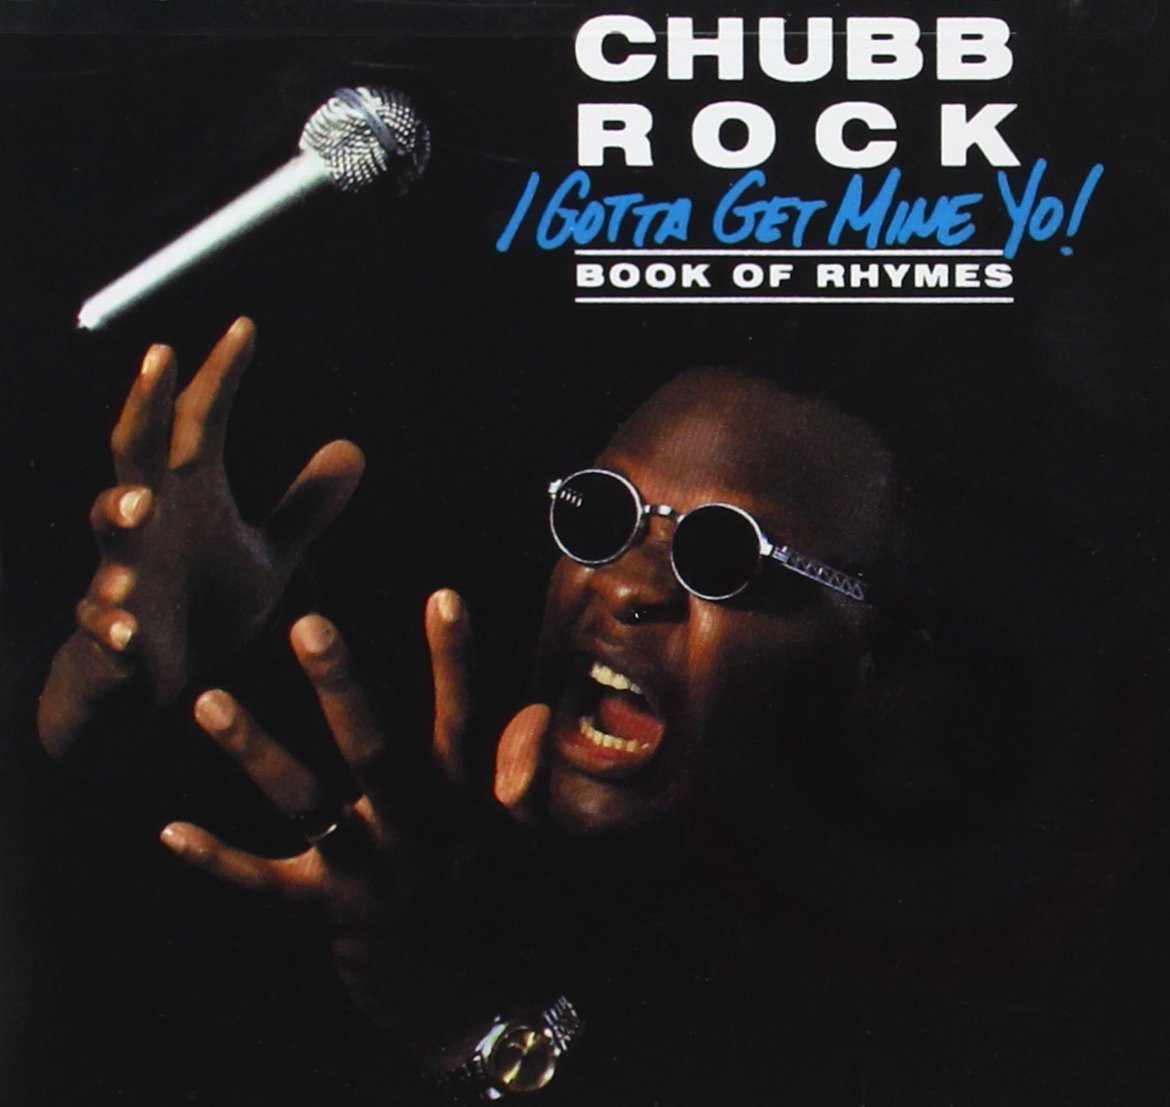 Chubb Rock - I Gotta Get Mine Yo! Book Of Rhymes (1992) FLAC Download